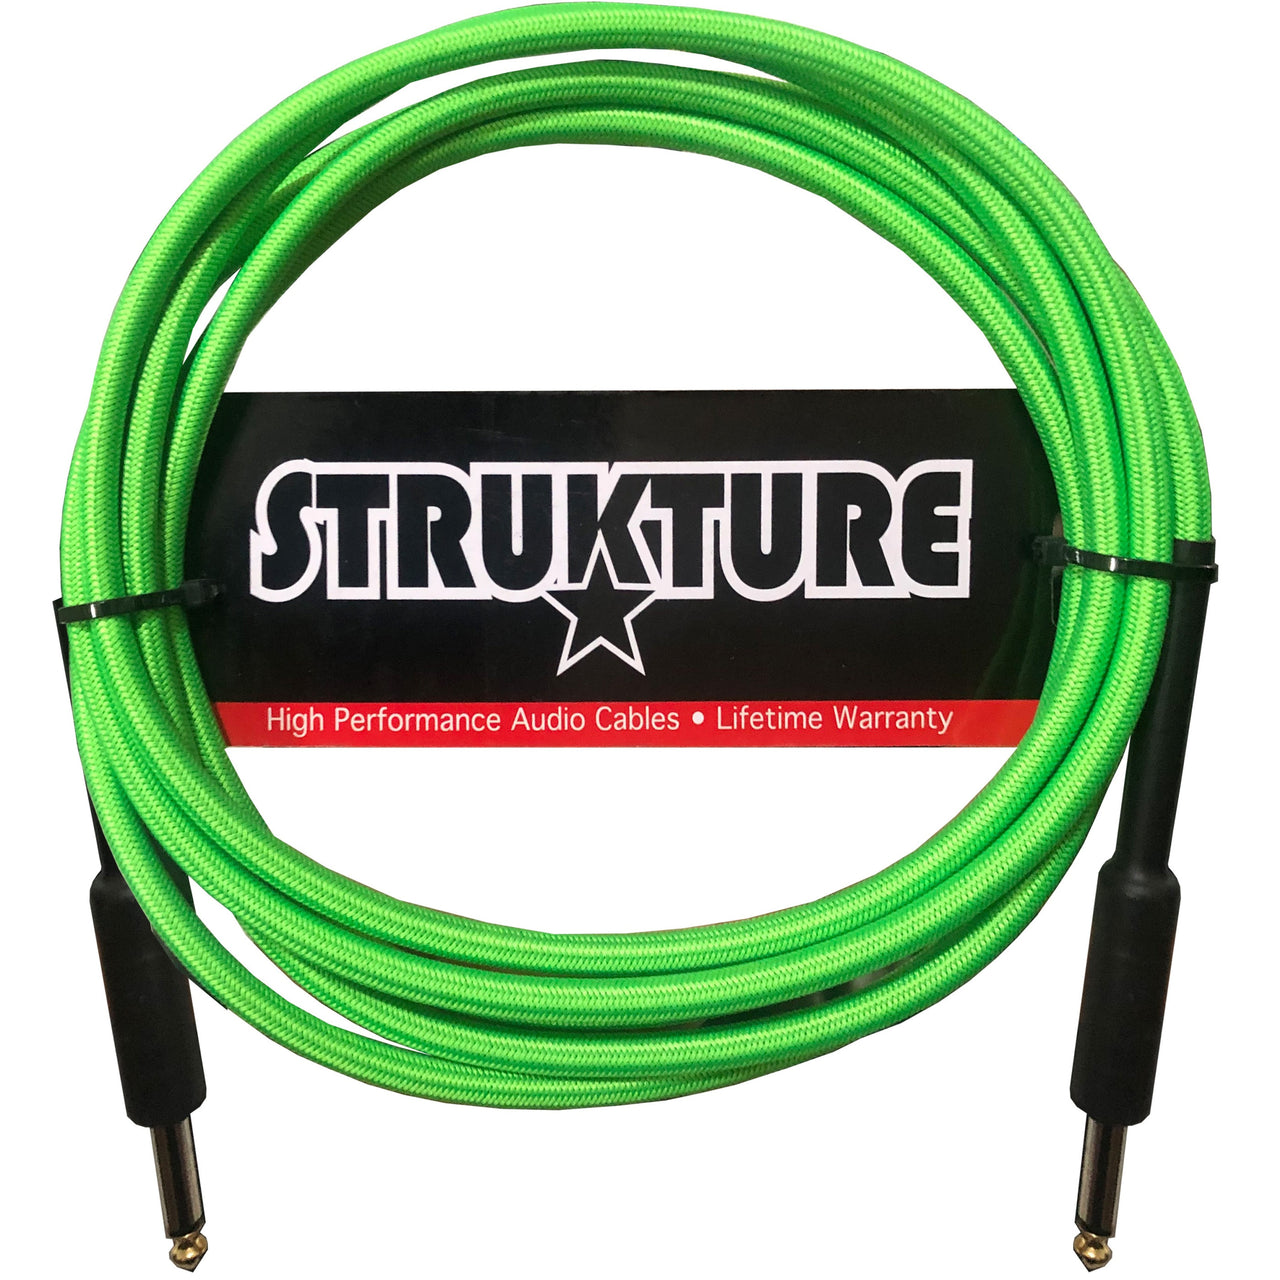 Cable Strukture Sc10ng Para Instrumento 3.05 Metros Textil Verde Neon